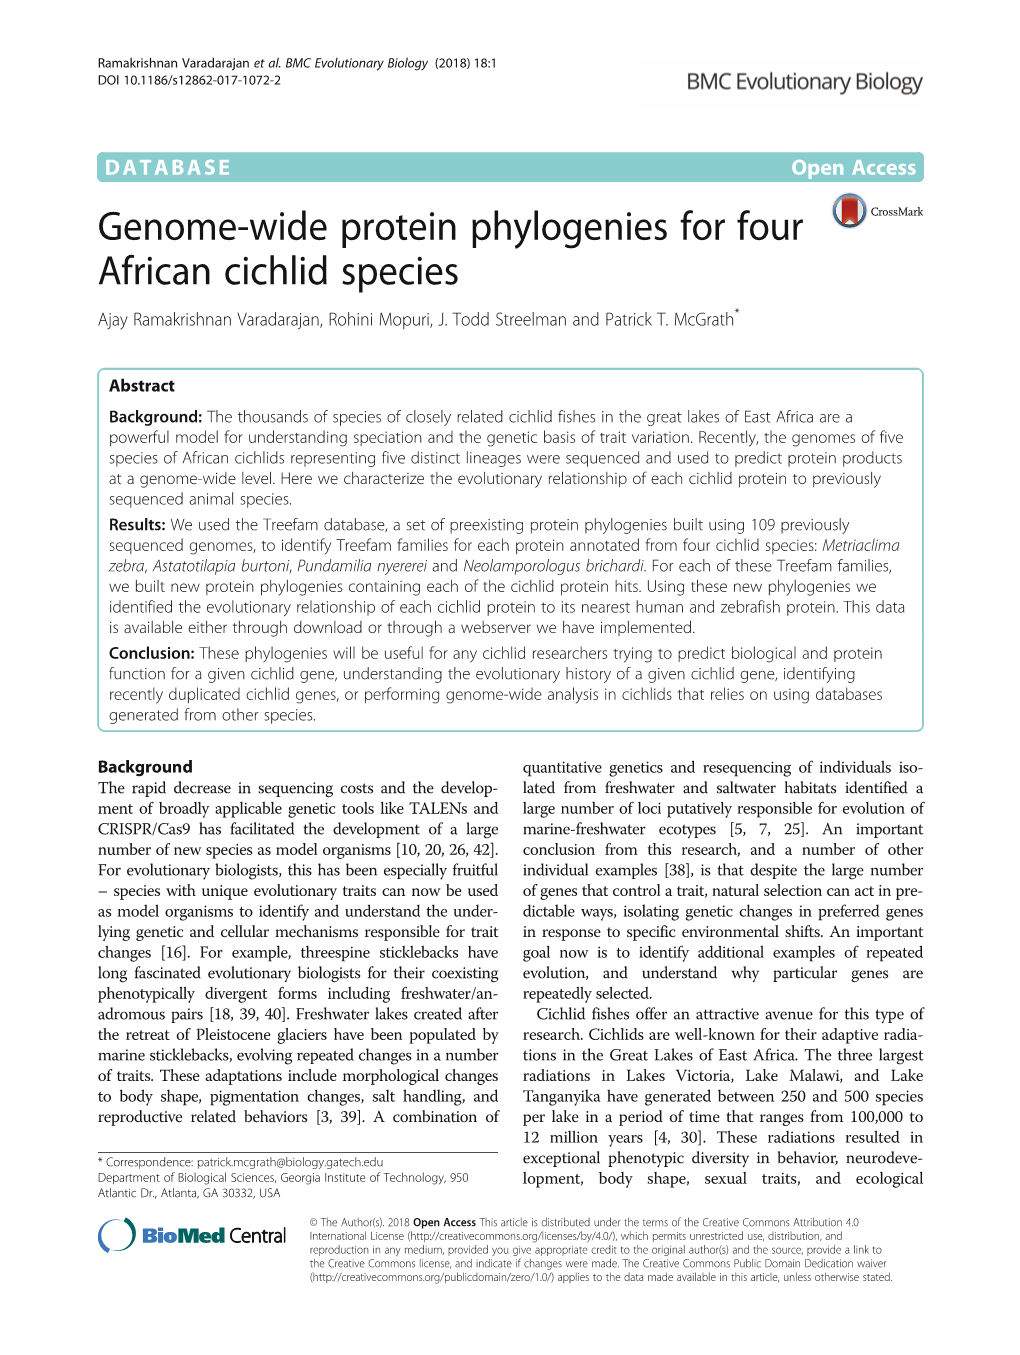 Genome-Wide Protein Phylogenies for Four African Cichlid Species Ajay Ramakrishnan Varadarajan, Rohini Mopuri, J